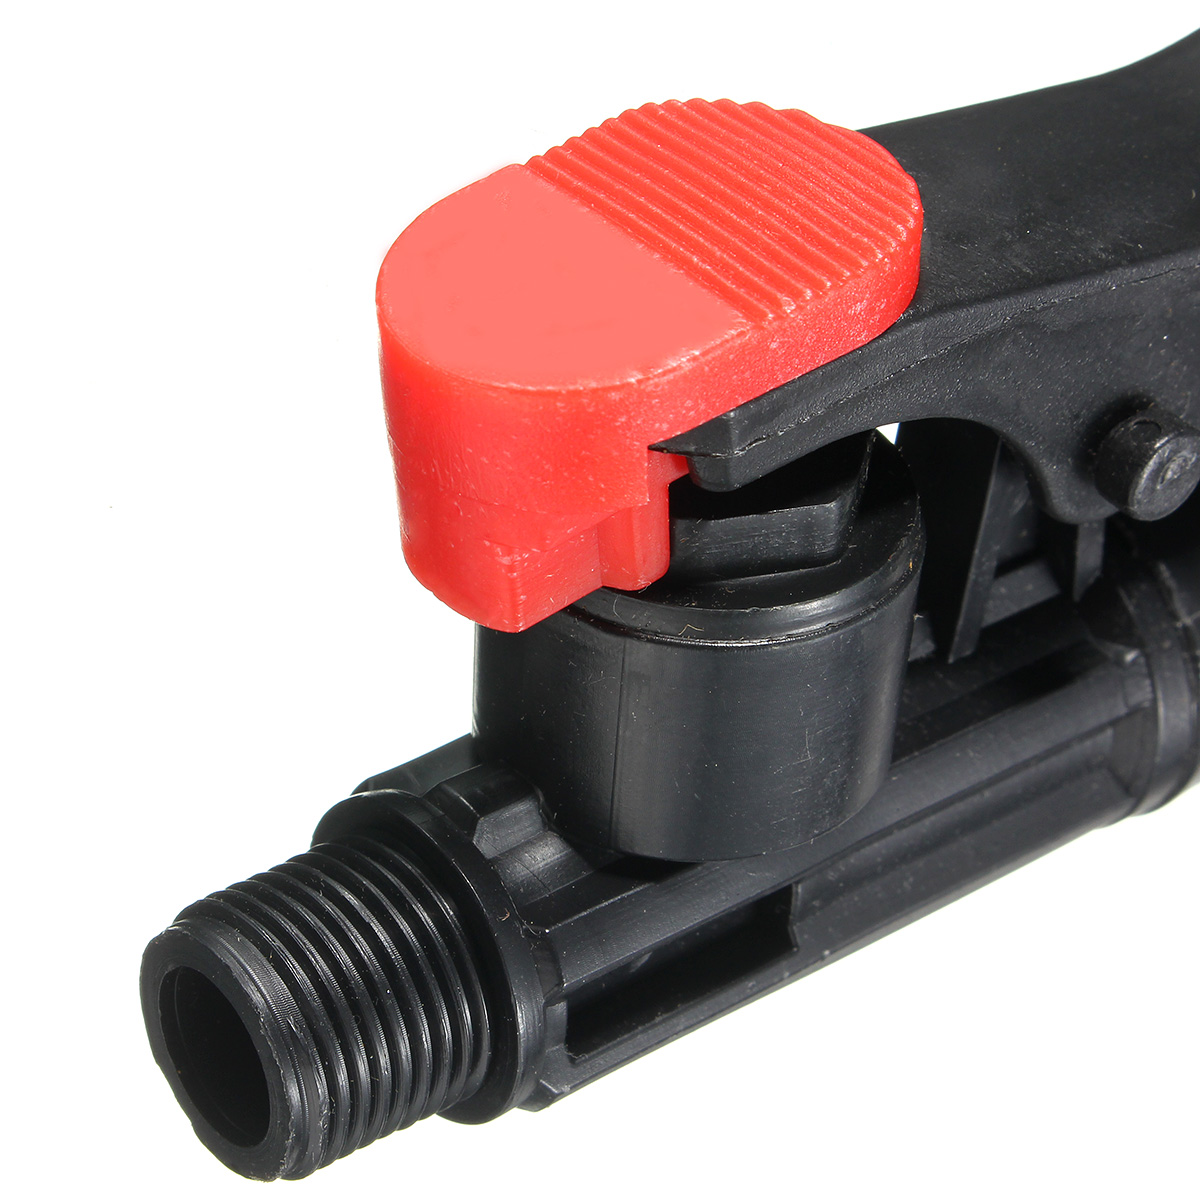 Trigger-Atomizer-Handle-Sprayer-Parts-Agricultural-Garden-Weed-Pest-Control-1292867